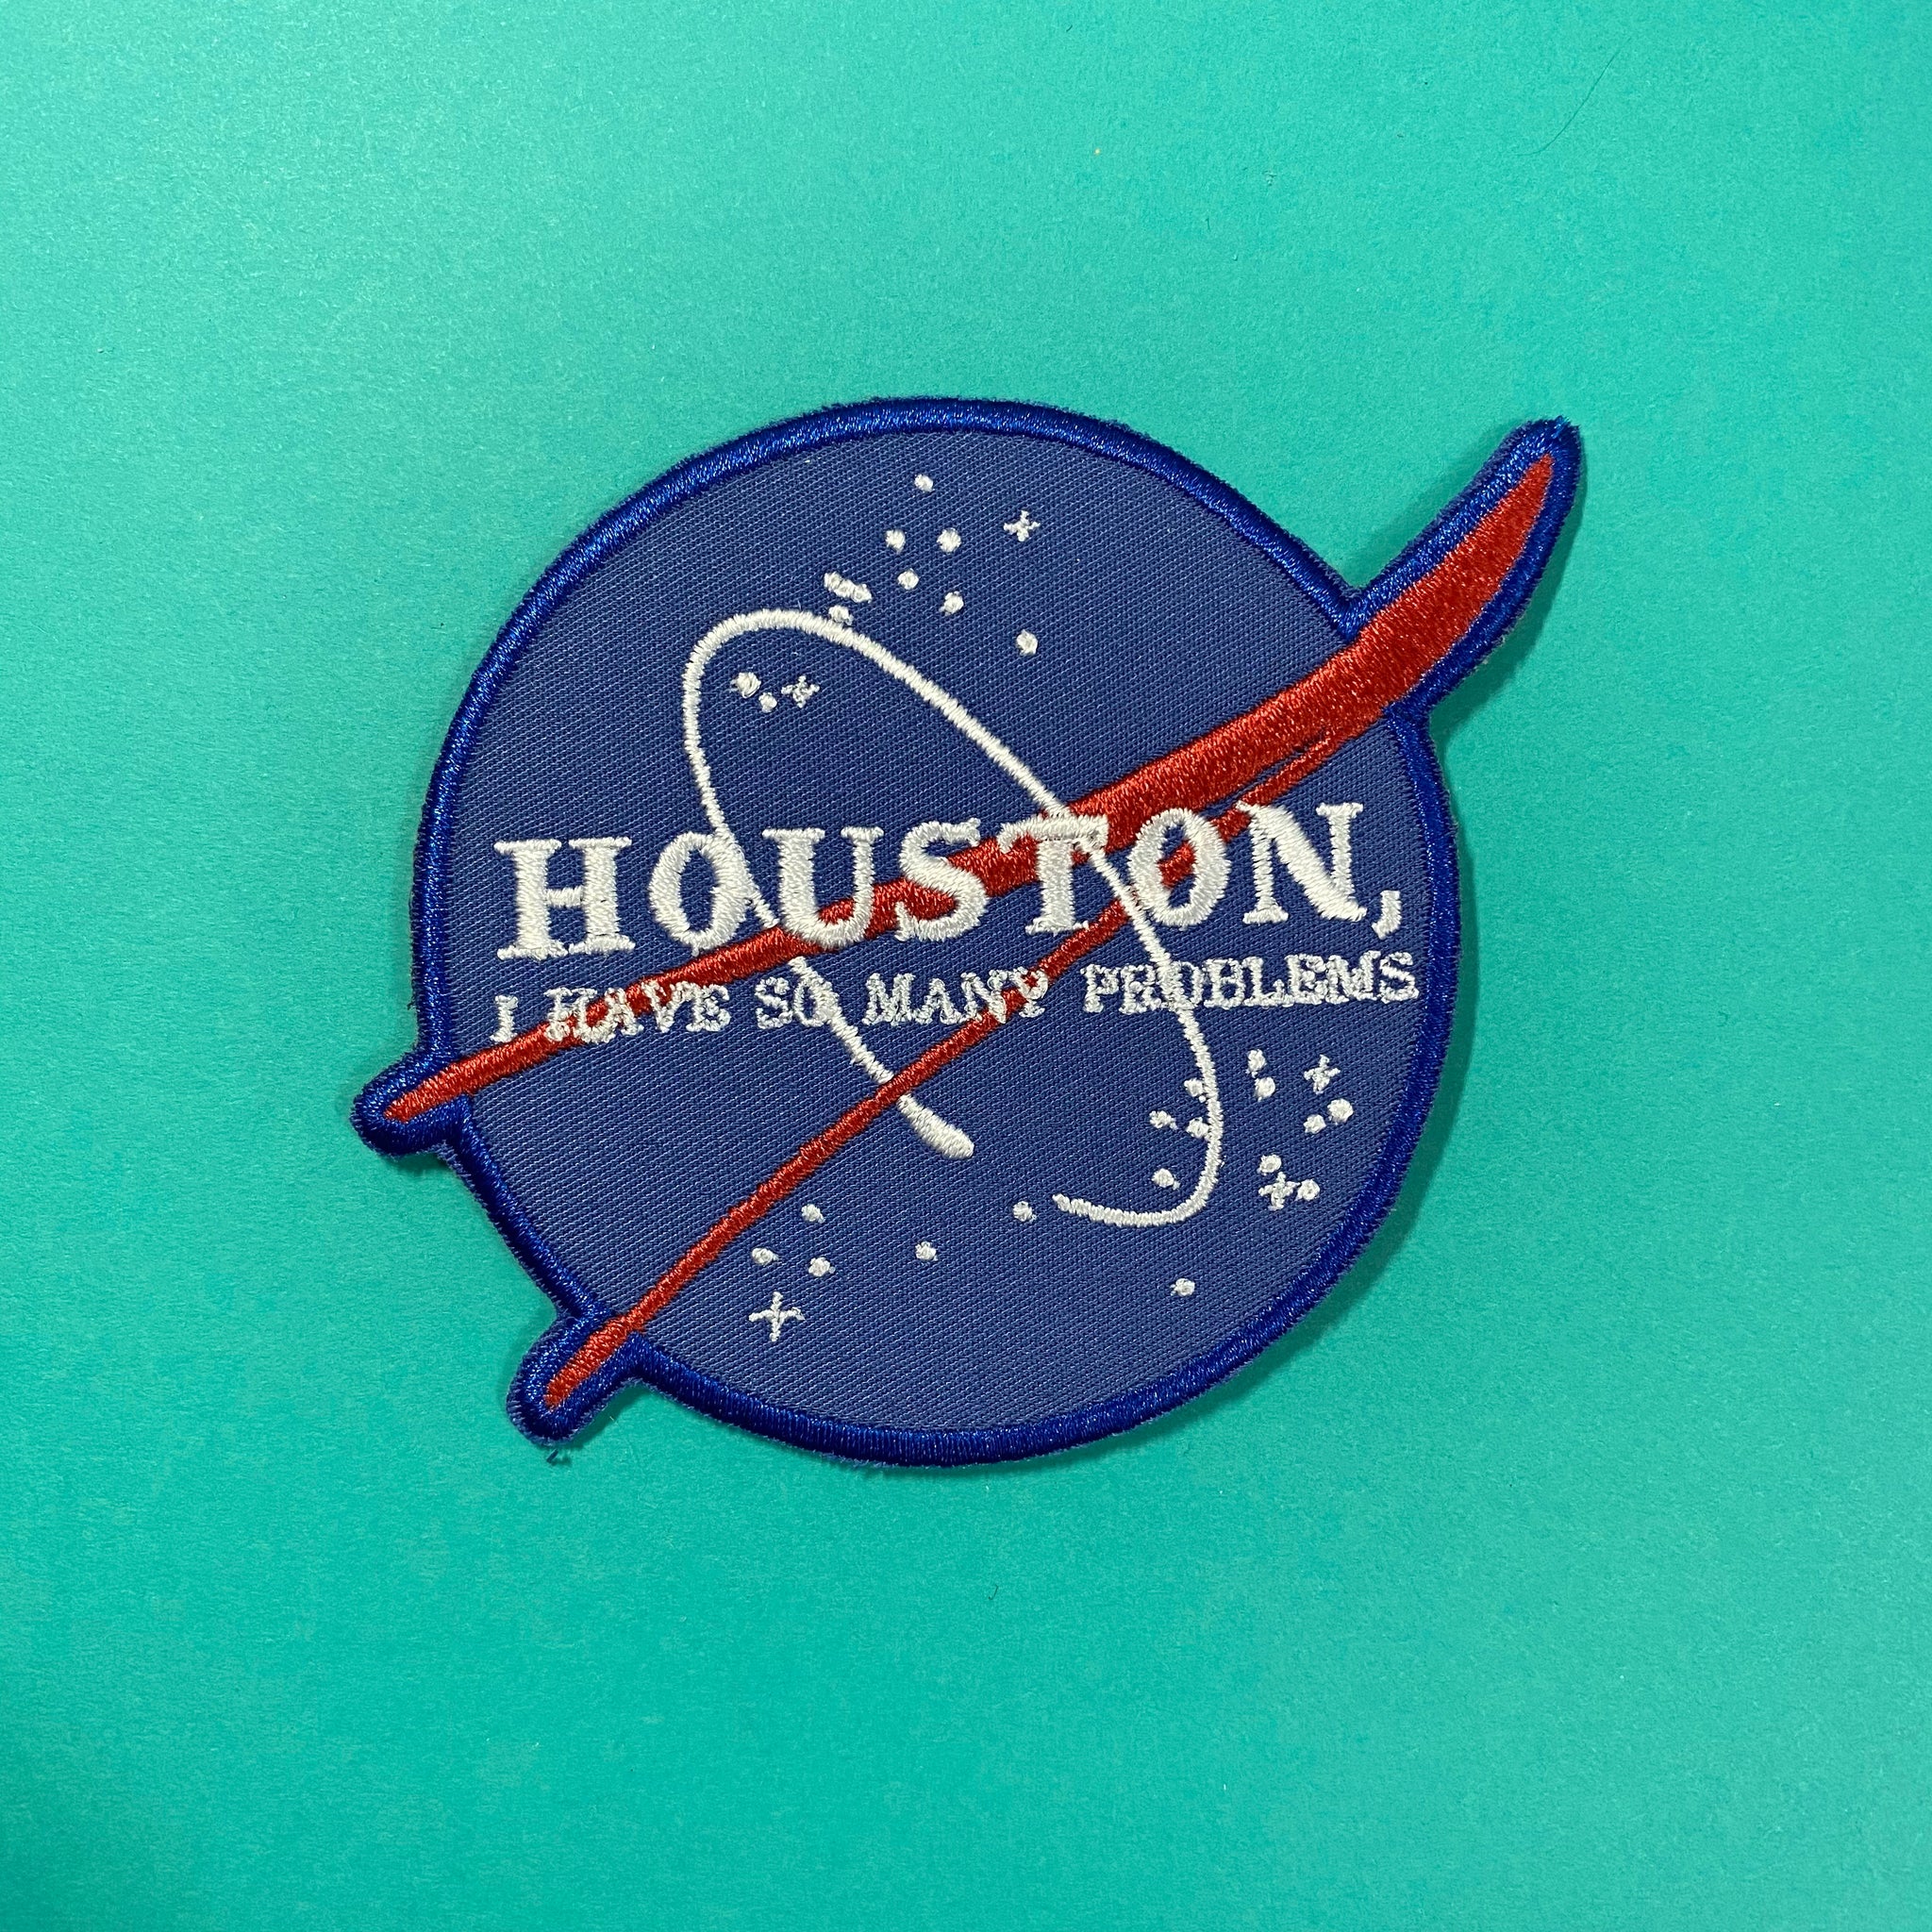 Houston, I Have So Many Problems NASA Inspired Patch